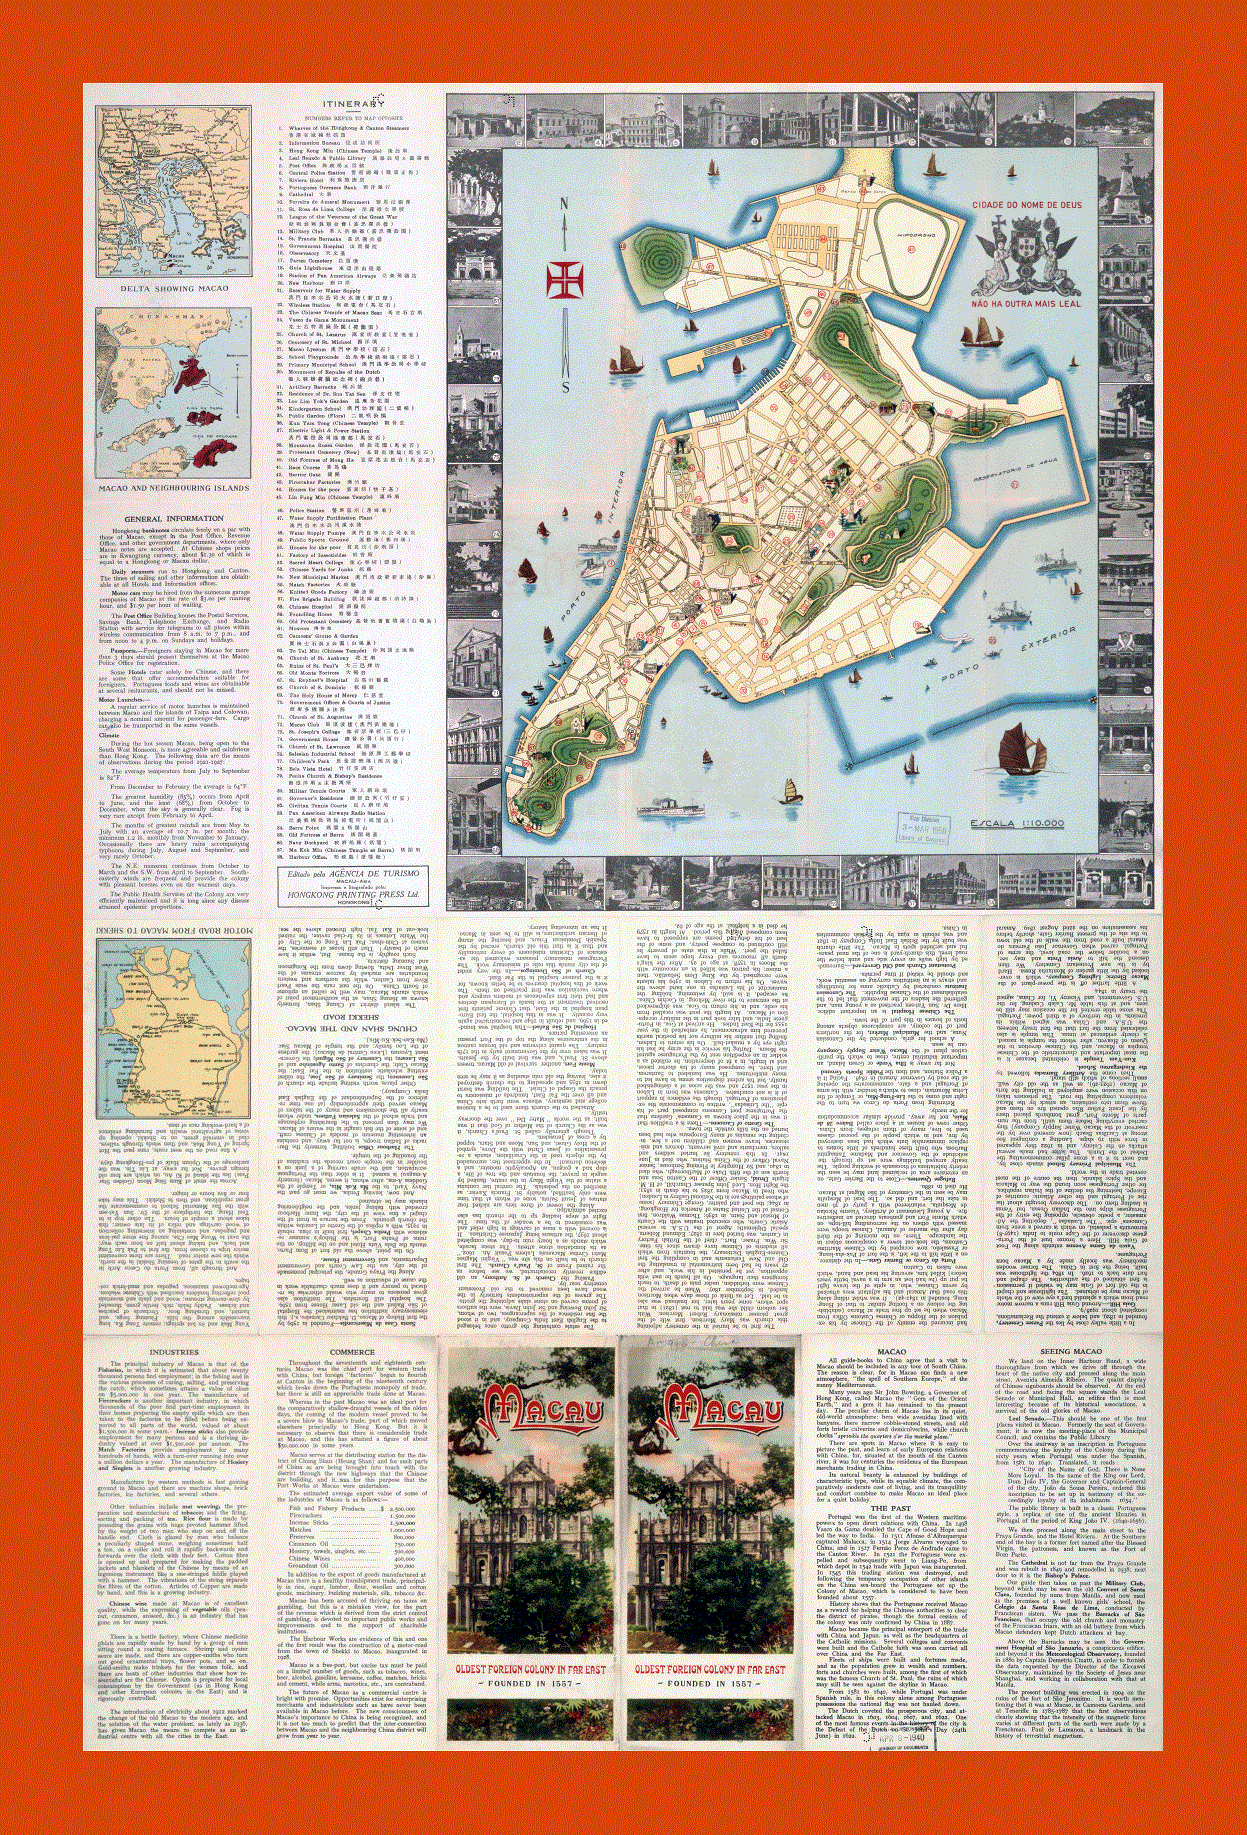 Old tourist map of Macau - 1936